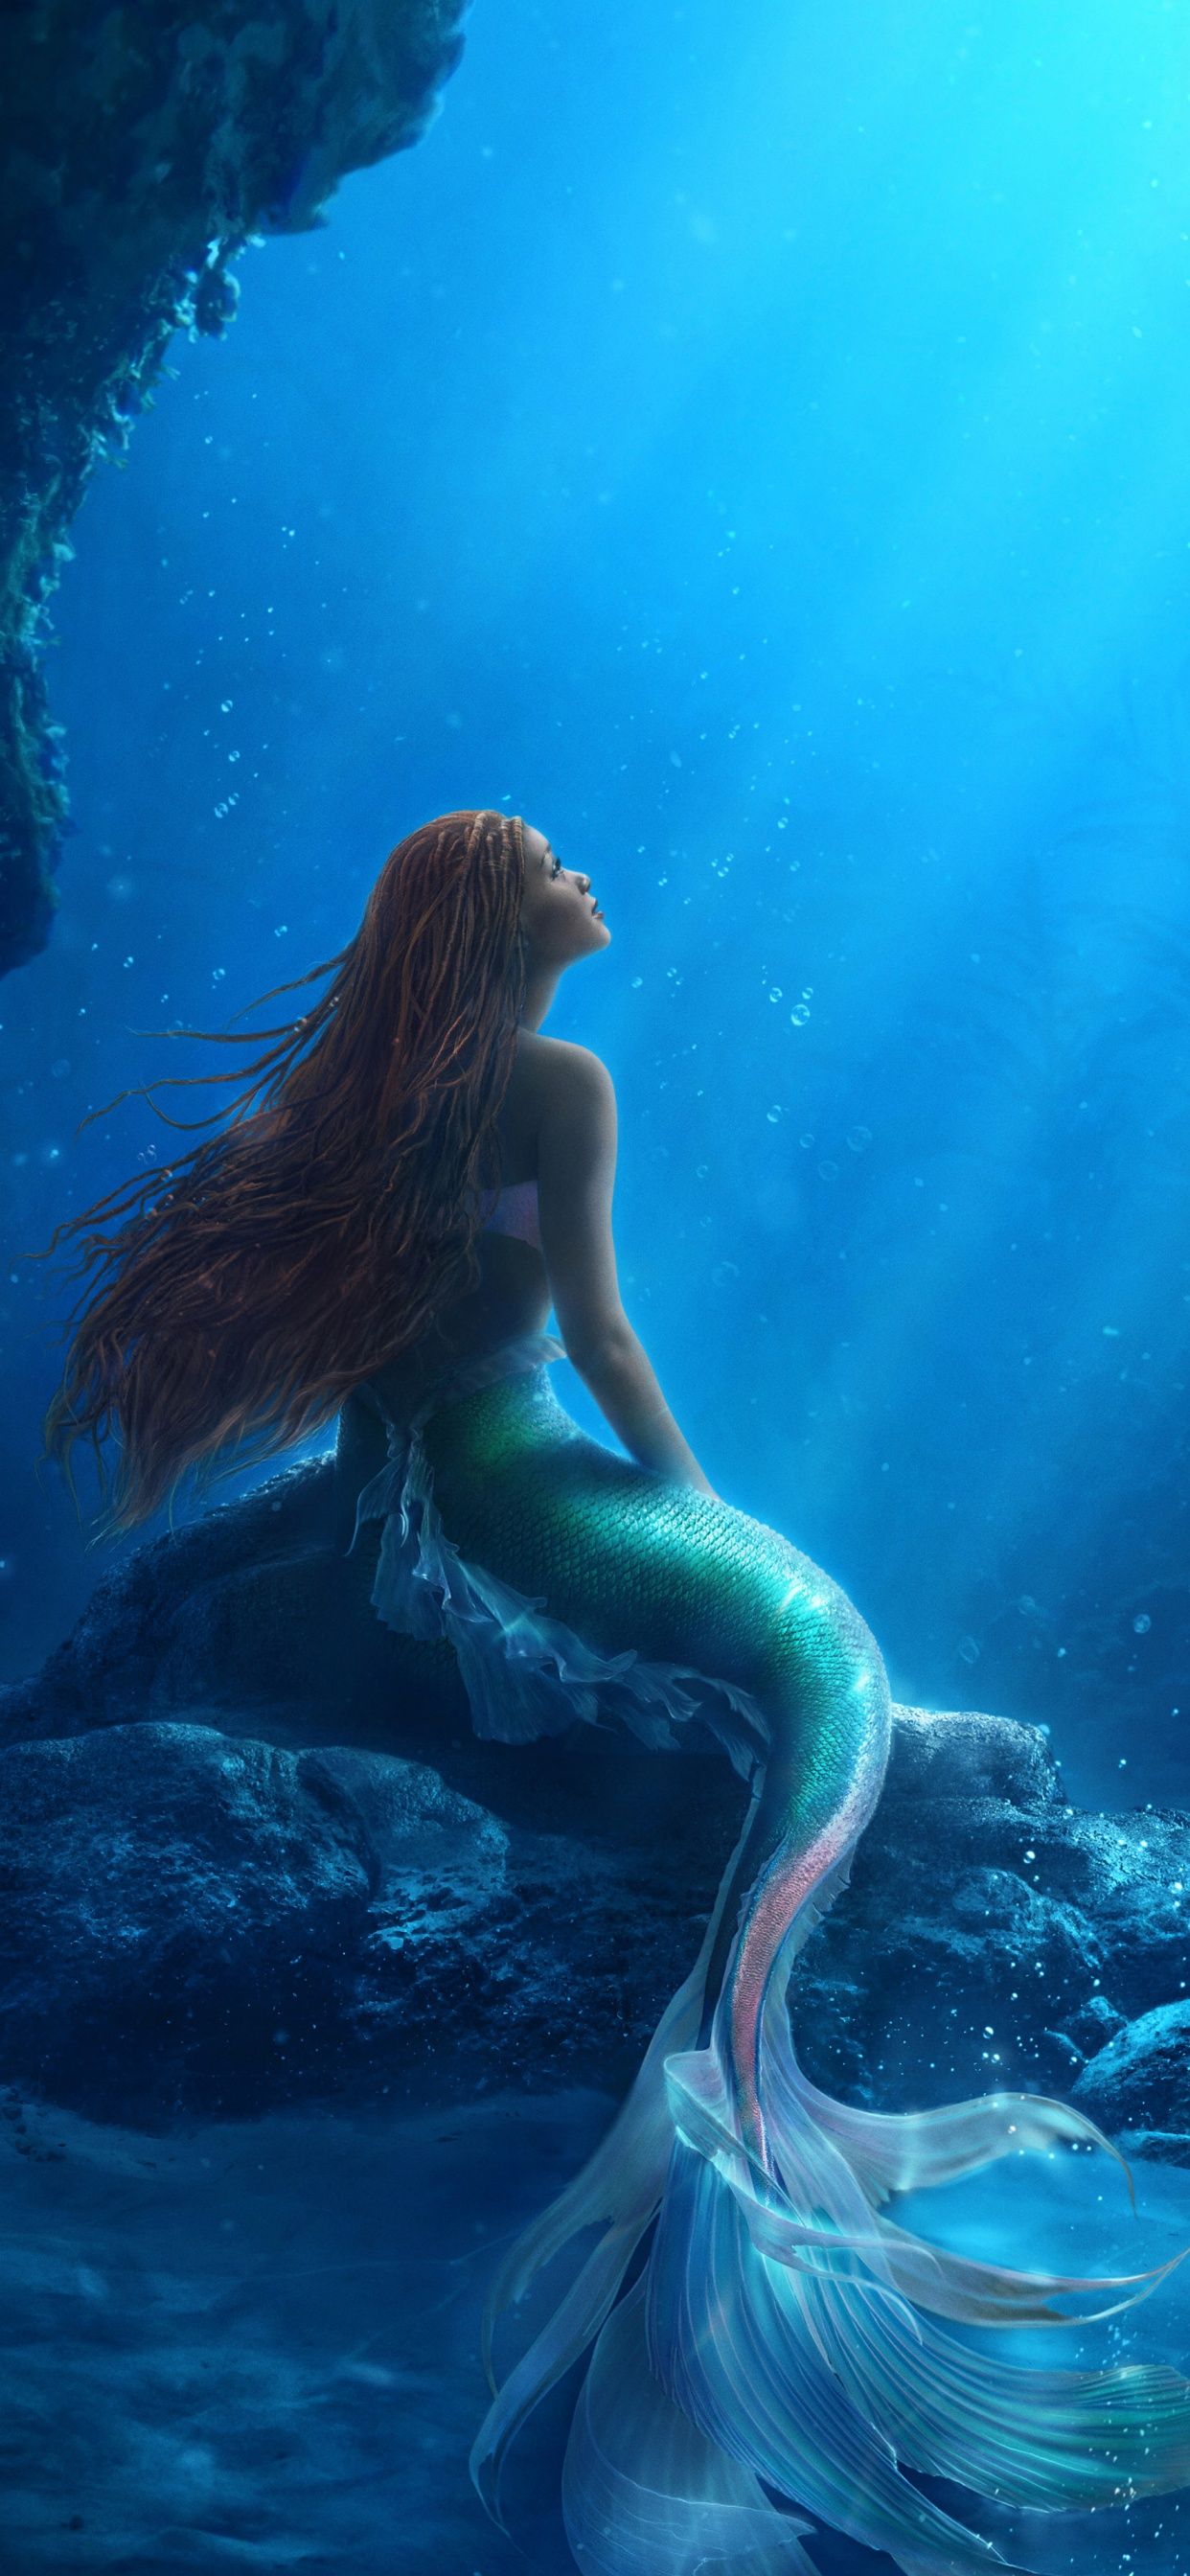 The Little Mermaid Wallpaper 4K, Disney movies, Movies